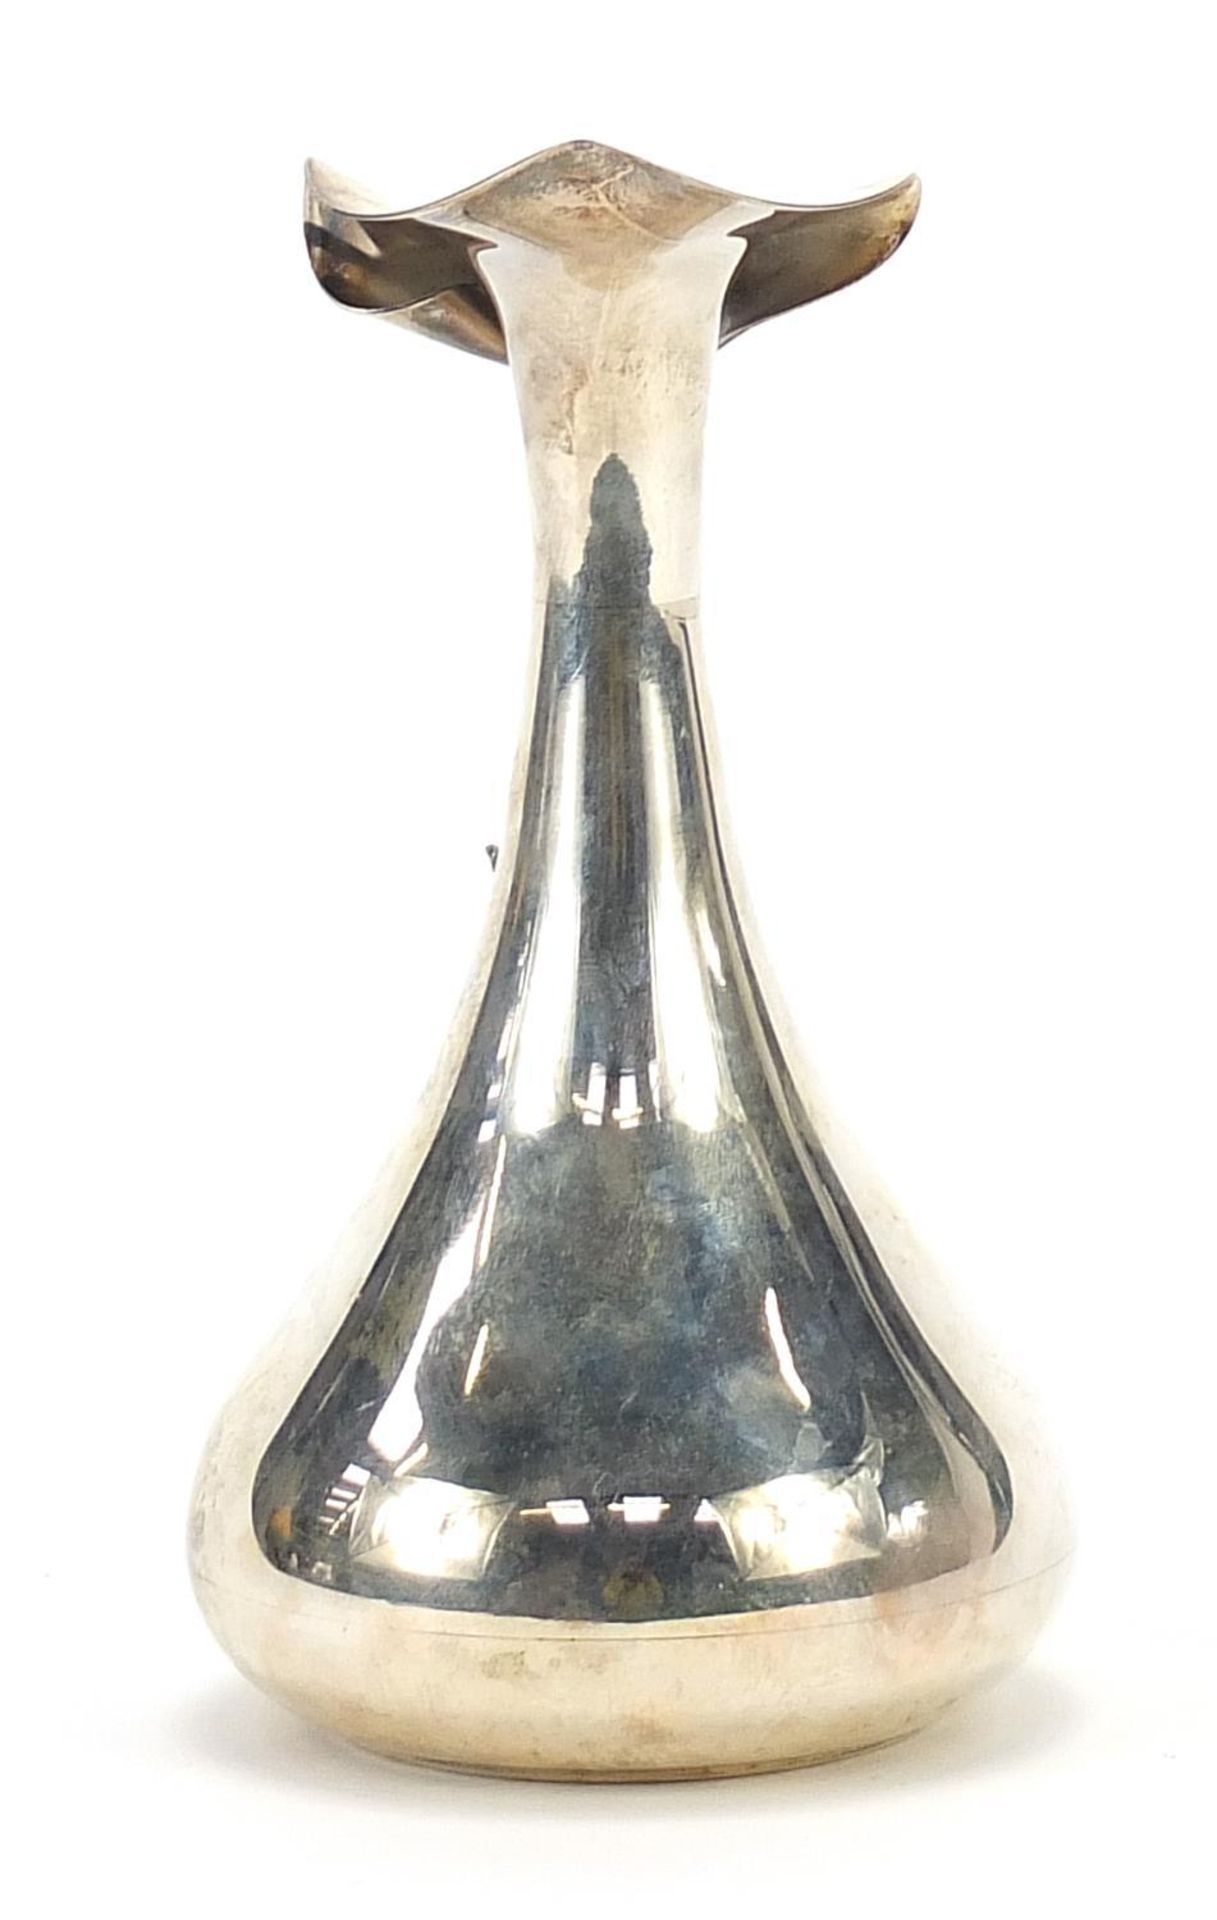 Modernist silver coloured metal vase impressed 925 to the base, 14cm high, 120.5g : - Image 3 of 5